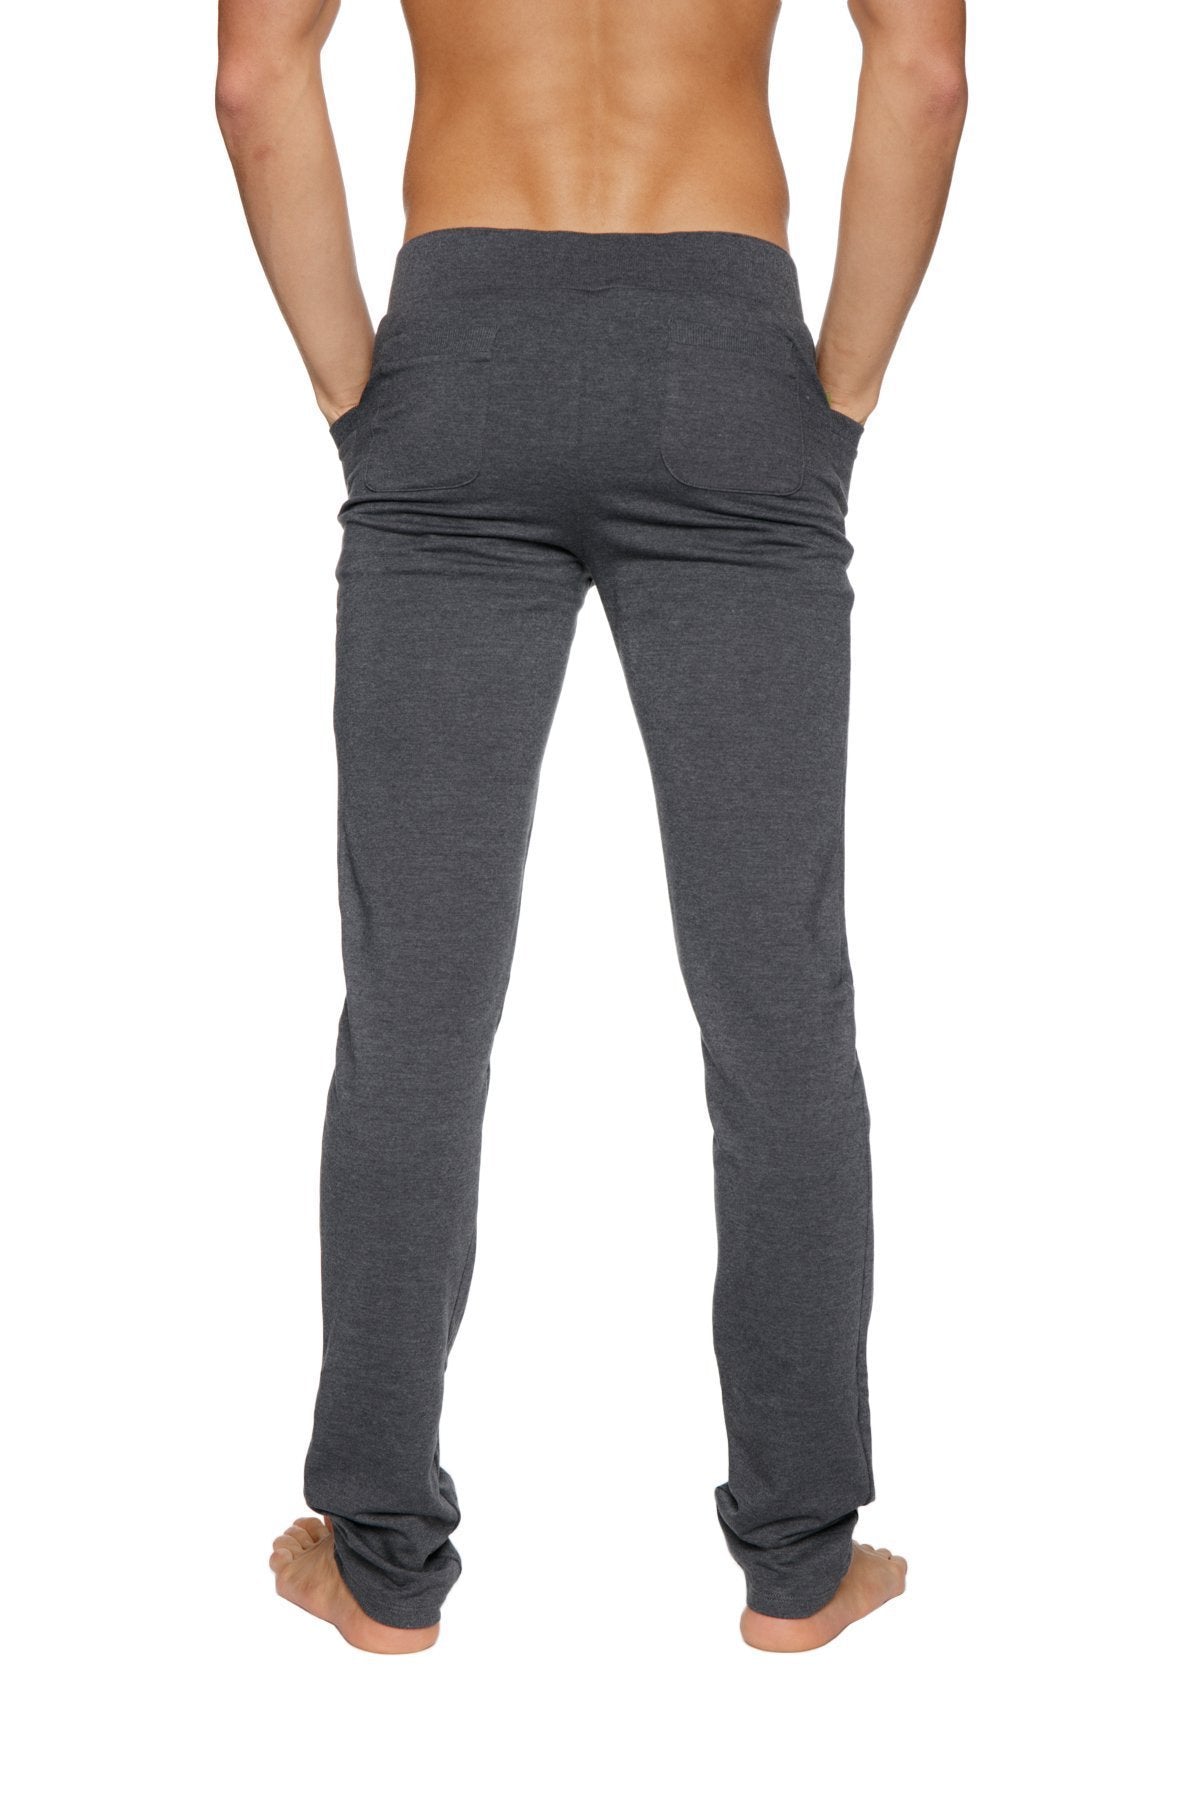 Tactical Urban at Home Dress Pant Yoga Pant (Charcoal) by 4-rth